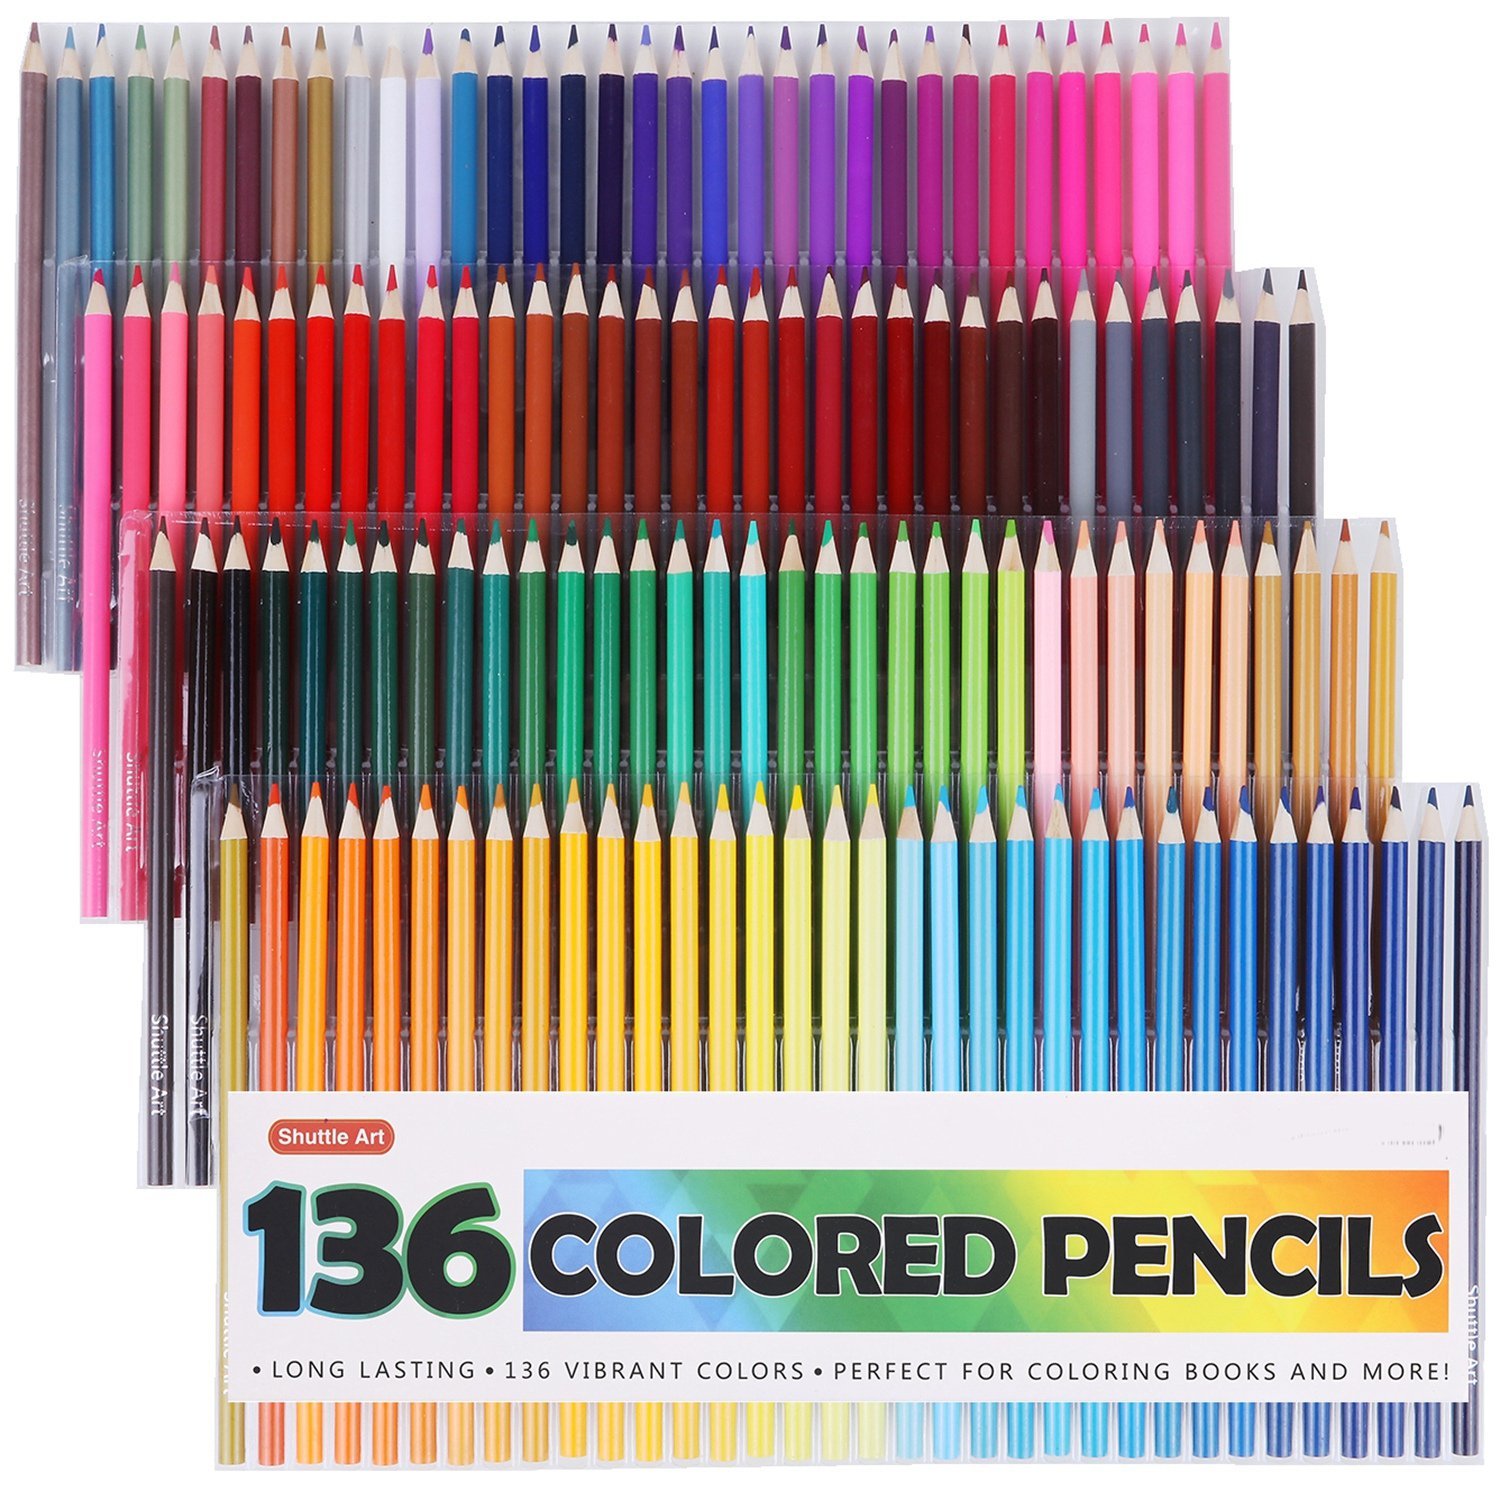 Amazon.com : Shuttle Art 136 Colored Pencils, Soft Core Color Pencil ...